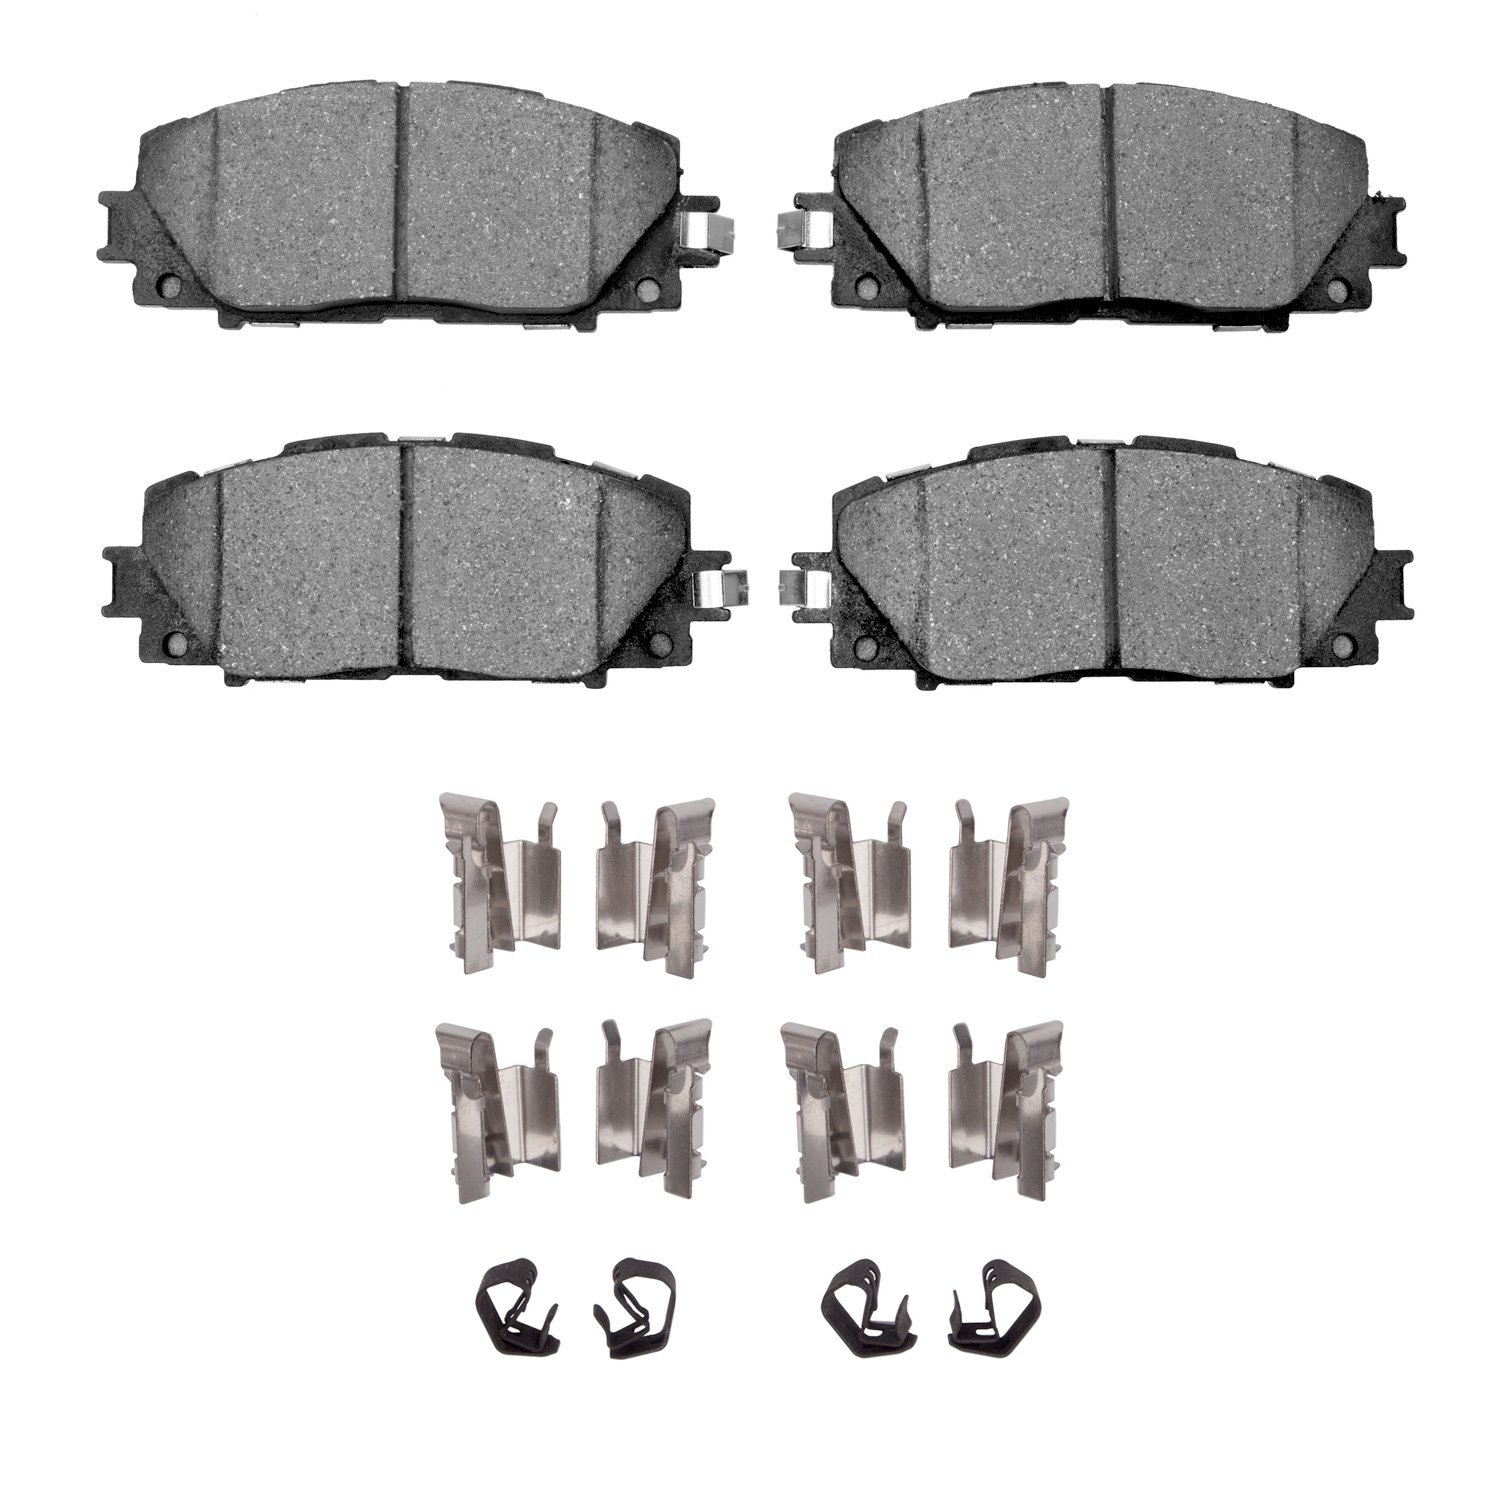 1310-1184-11 3000-Series Ceramic Brake Pads & Hardware Kit, Fits Select Lexus/Toyota/Scion, Position: Front